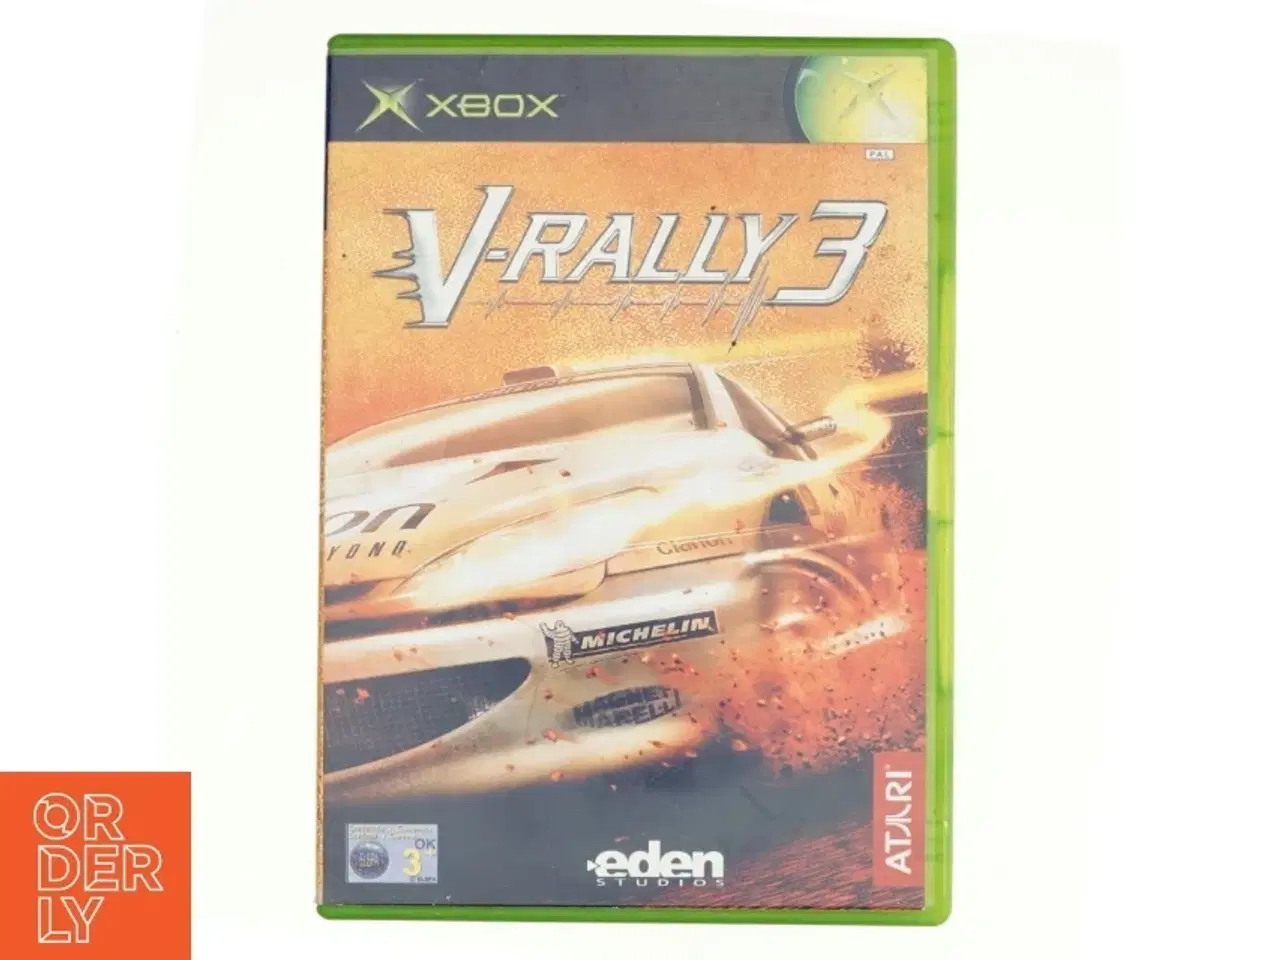 Billede 1 - V-rally 3 fra xbox